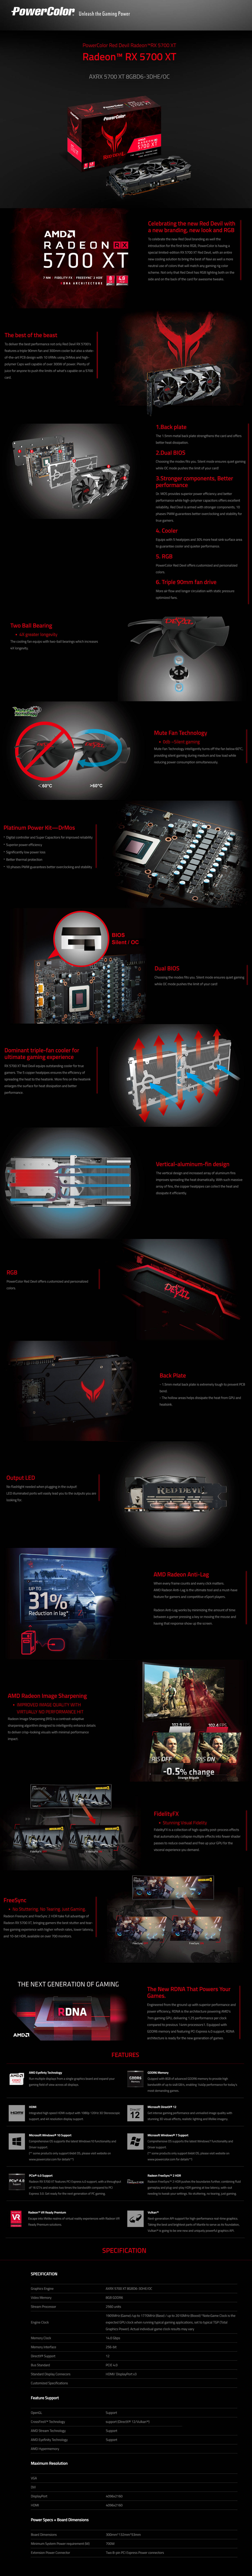 Buy Online PowerColor Red Devil Radeon RX 5700 XT 8GB GDDR6 (AXRX 5700 XT 8GBD6-3DHE-OC)